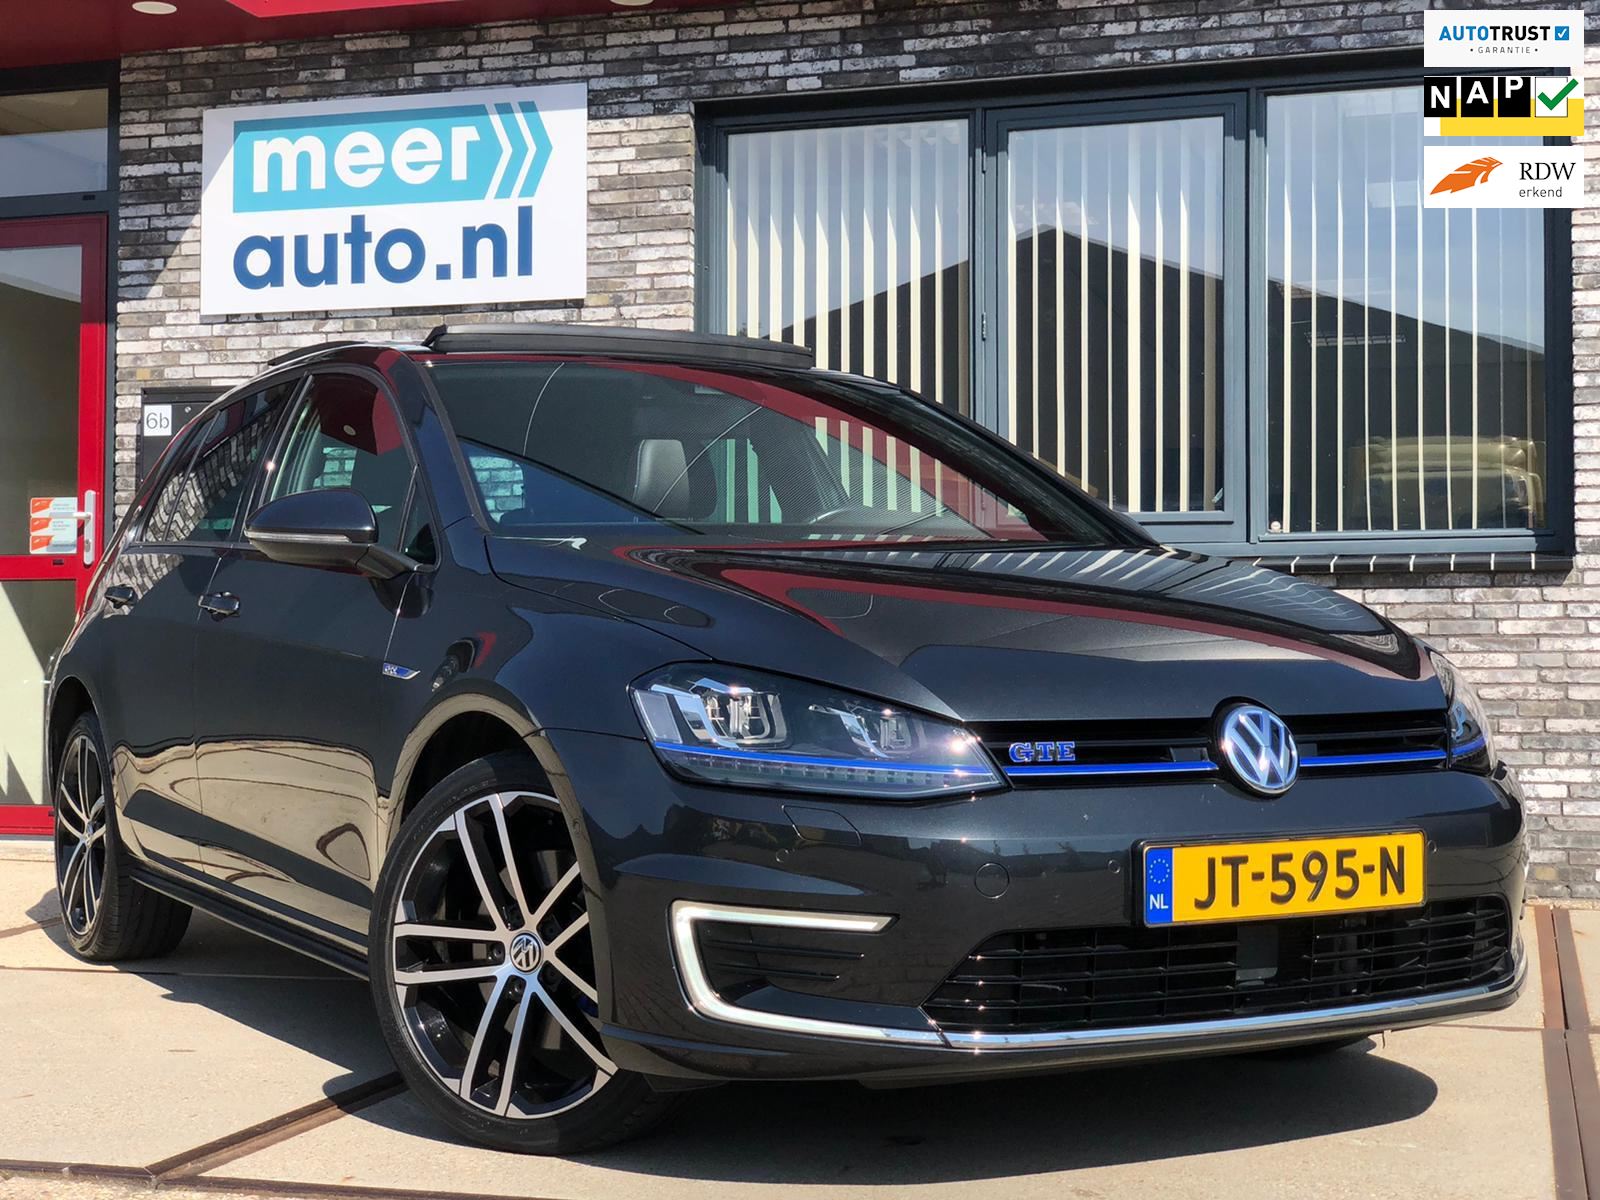 Volkswagen Golf occasion - Meerauto.nl